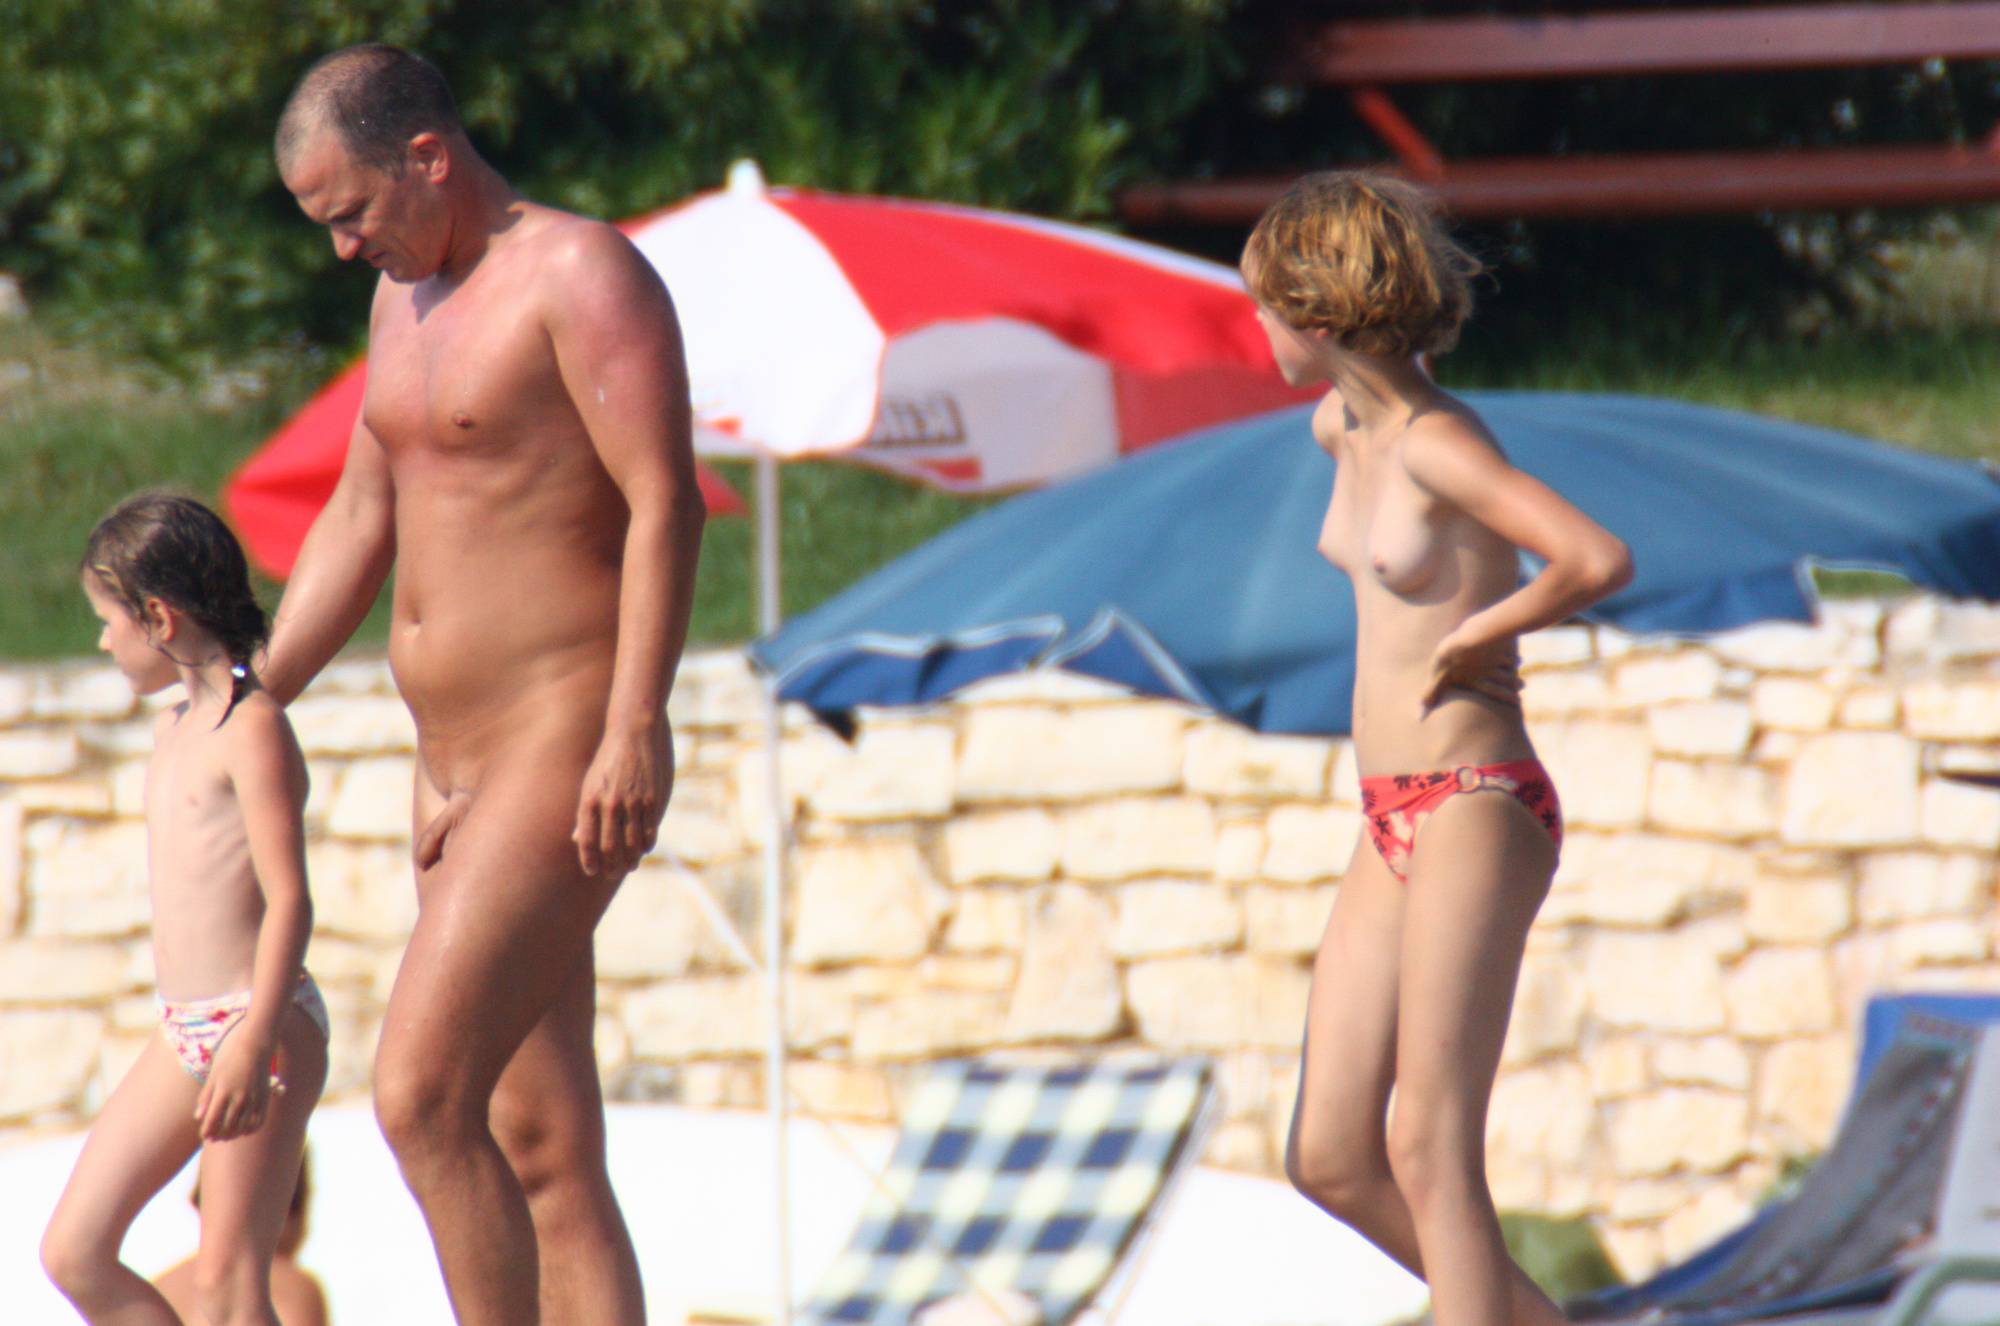 Pure Nudism Pics-Nudist Family Outdoor Fun - 4